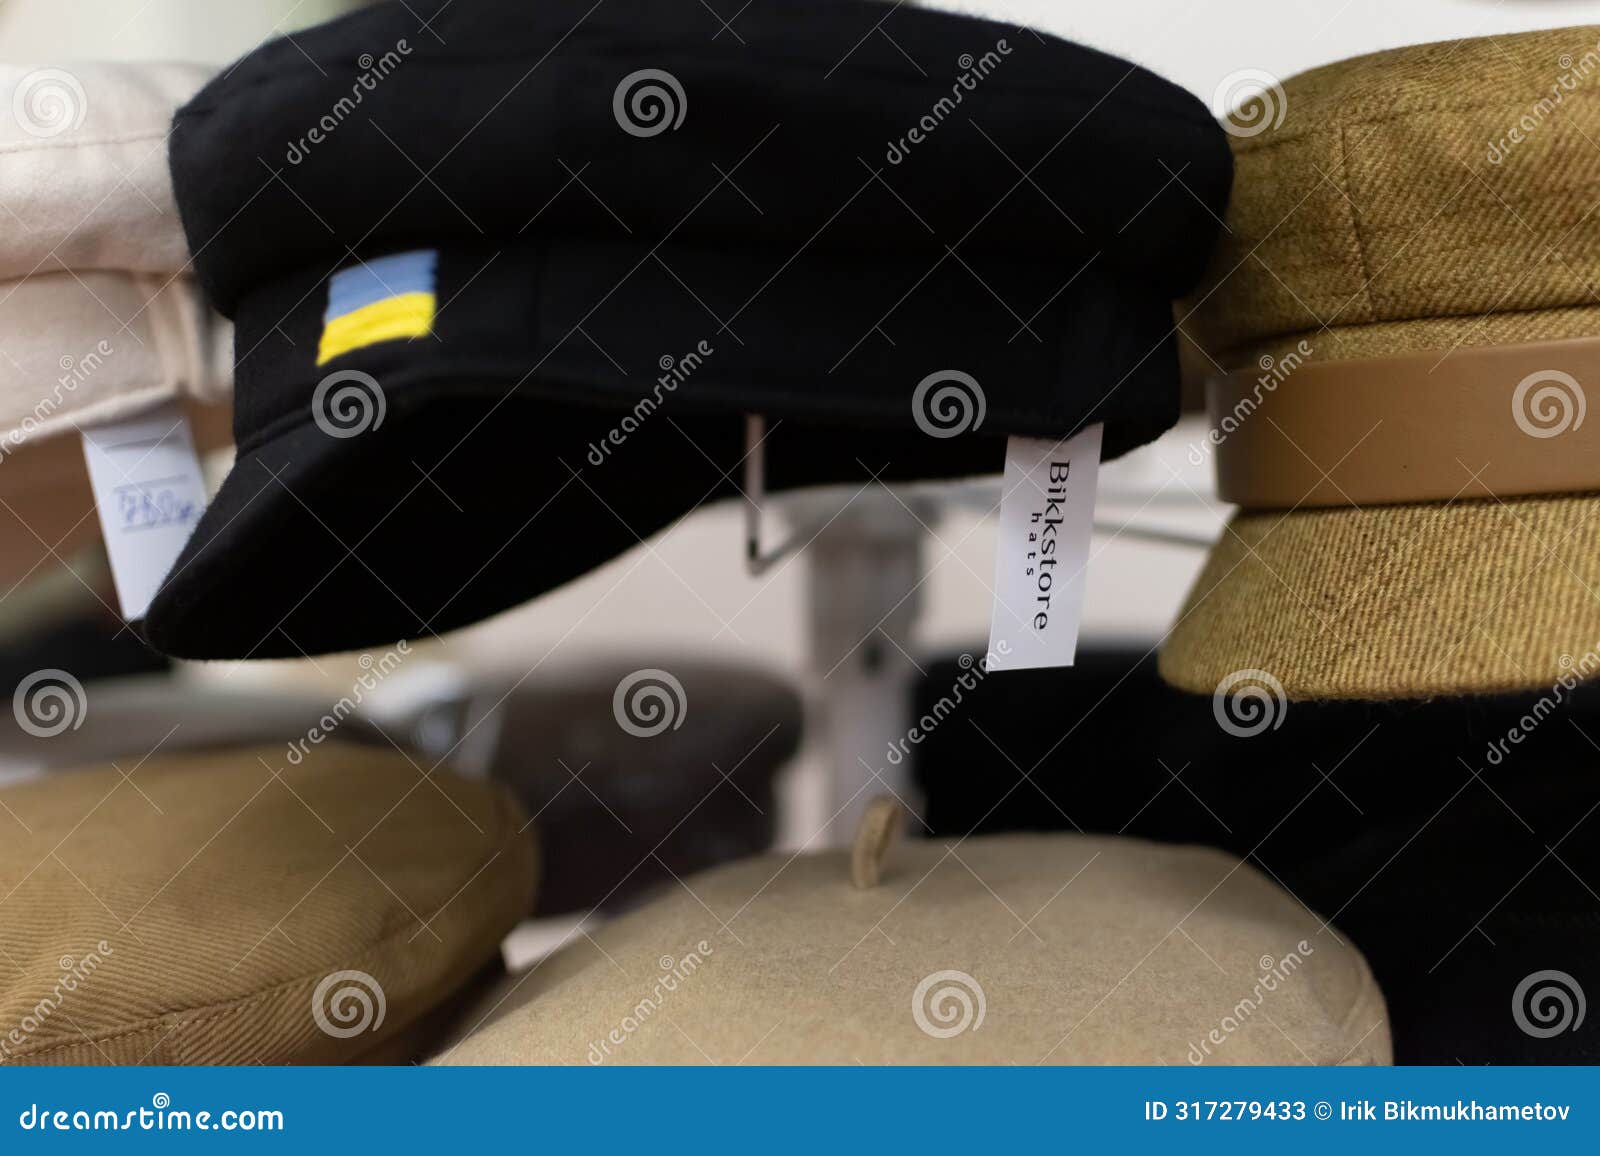 headwear from ukrainian manufacturer